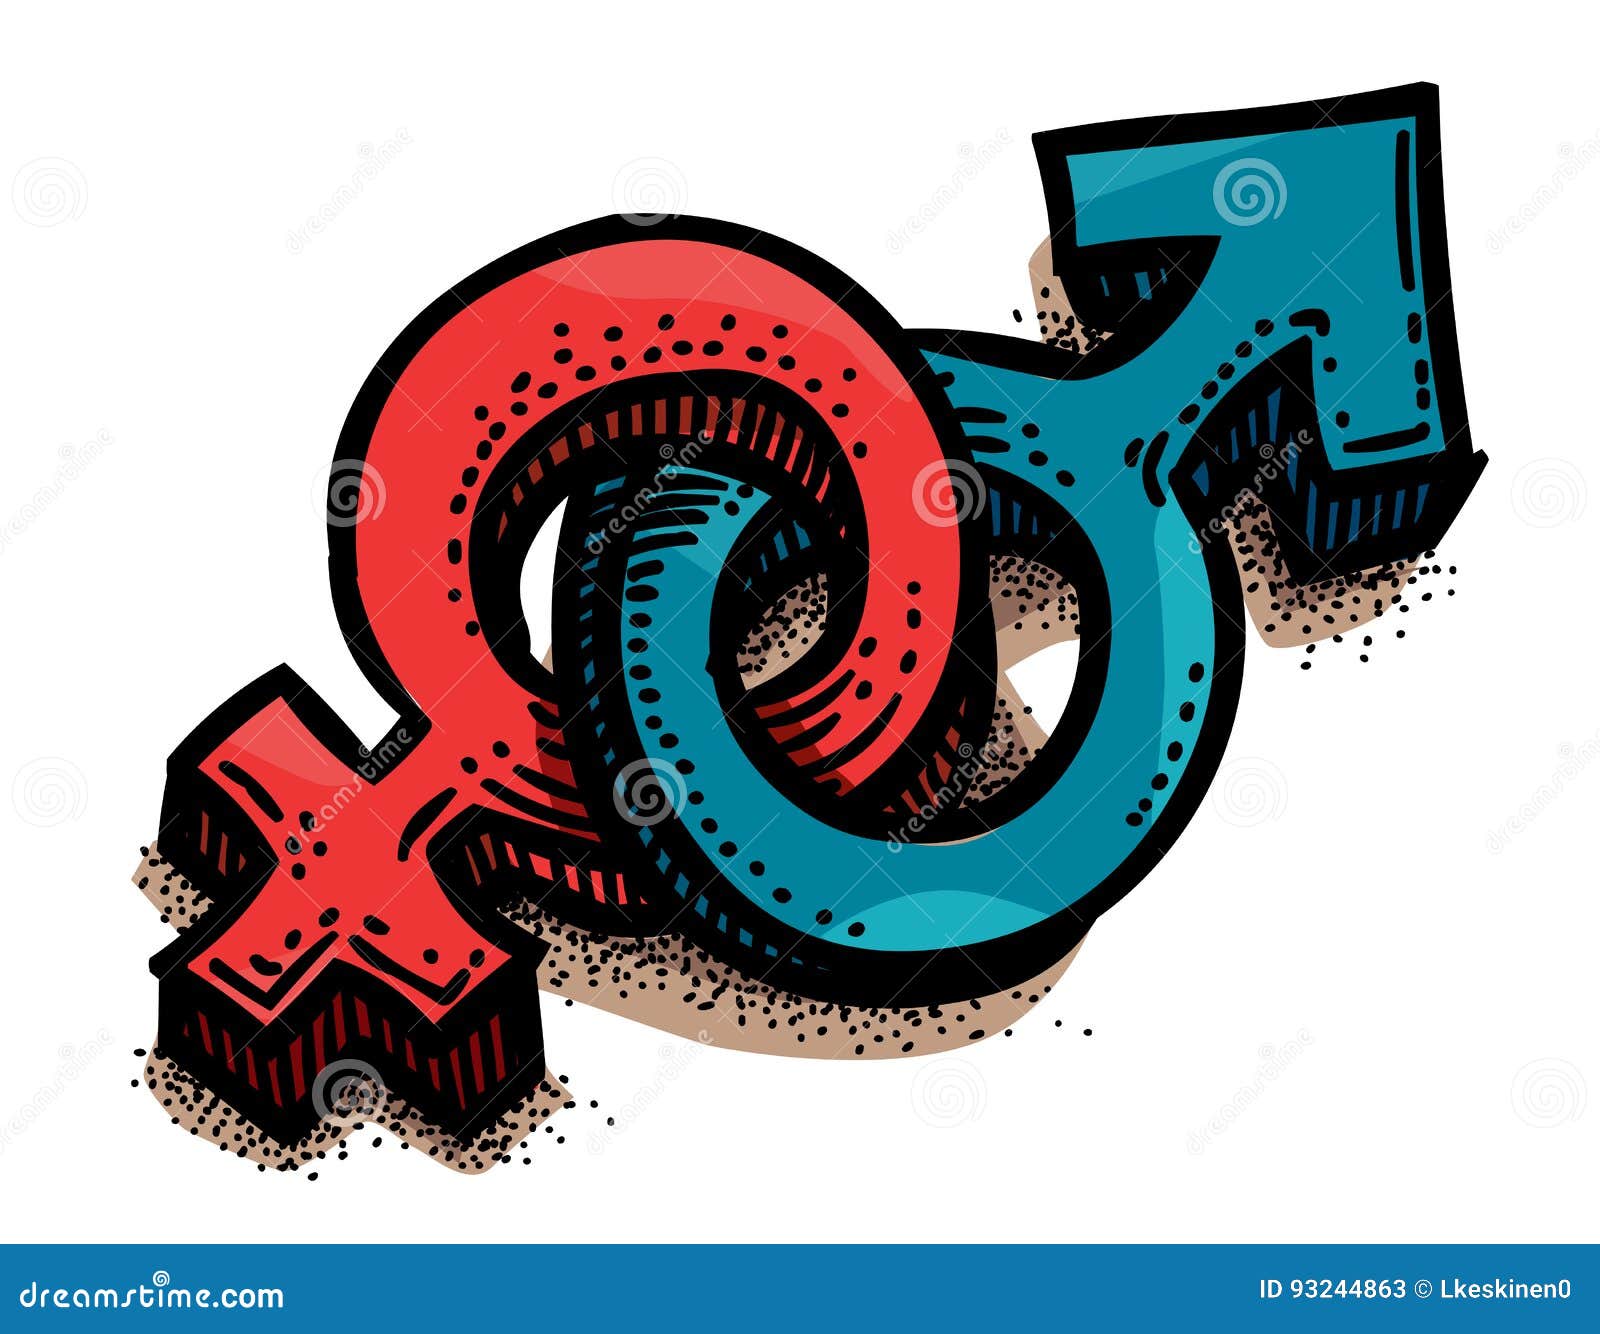 Cartoon Image of Male, Female Sex Symbol